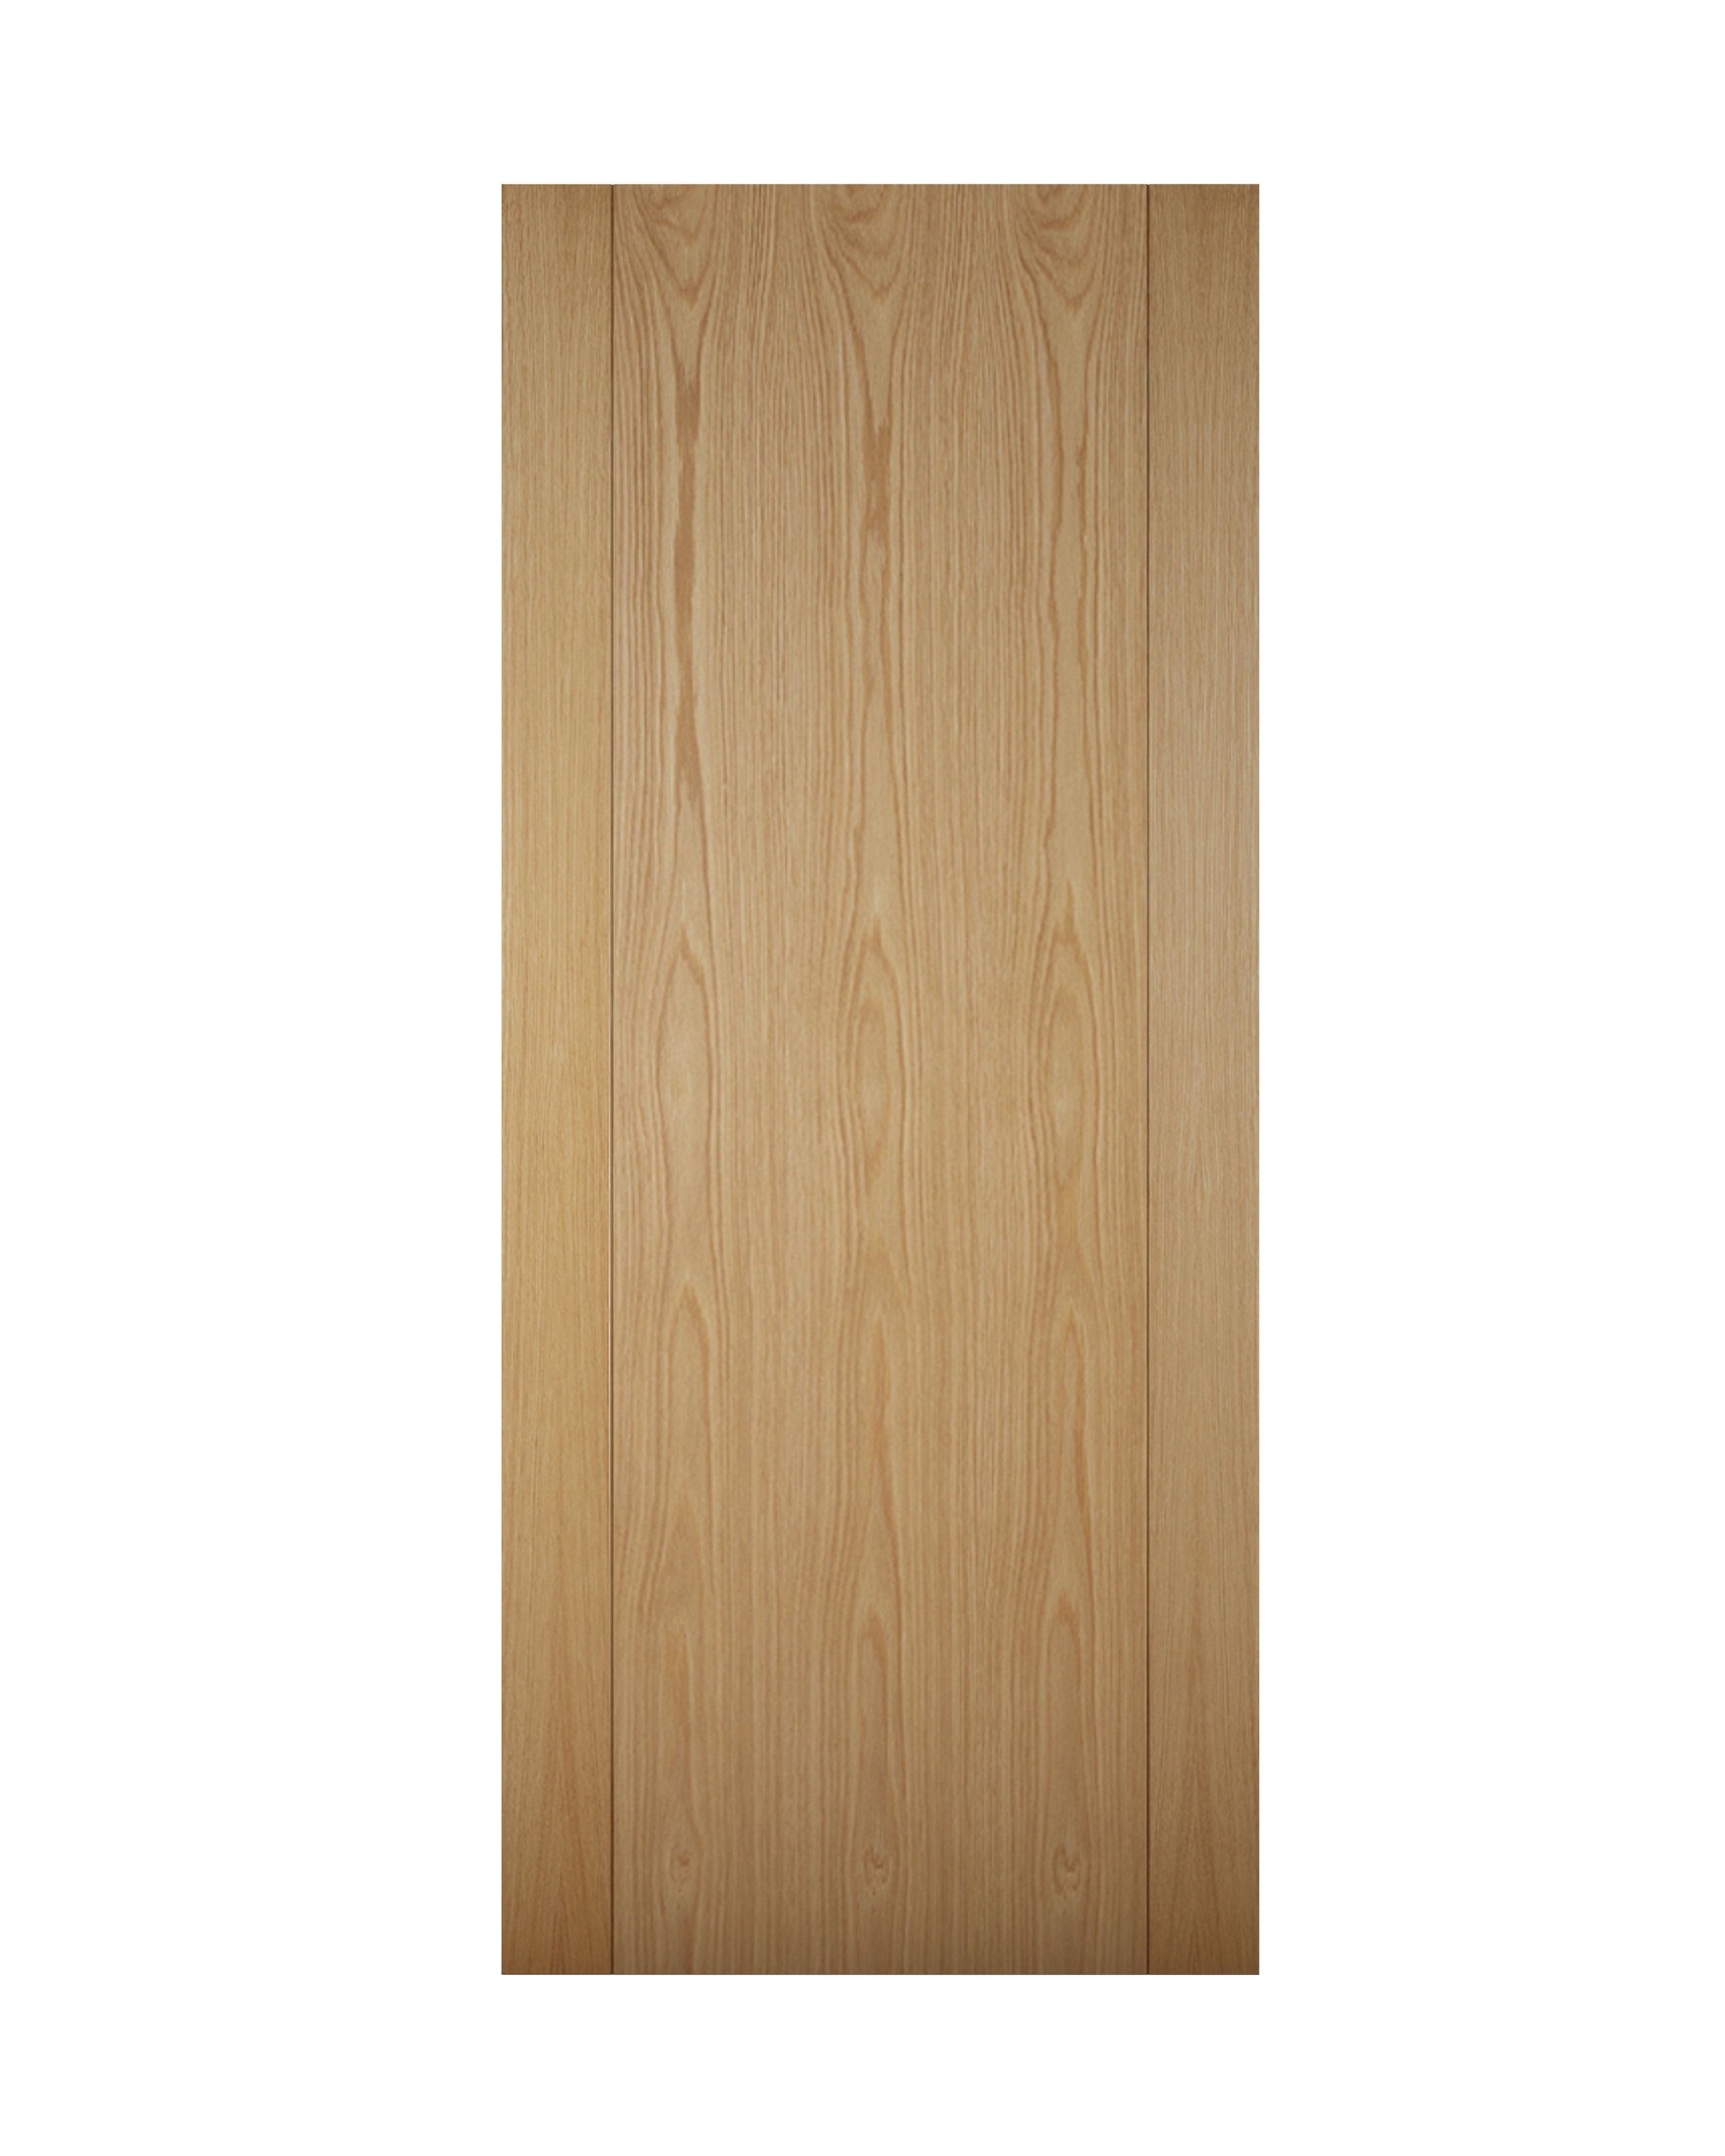 Veneered White oak veneer Front door & frame with letter plate, (H)2125mm (W)907mm